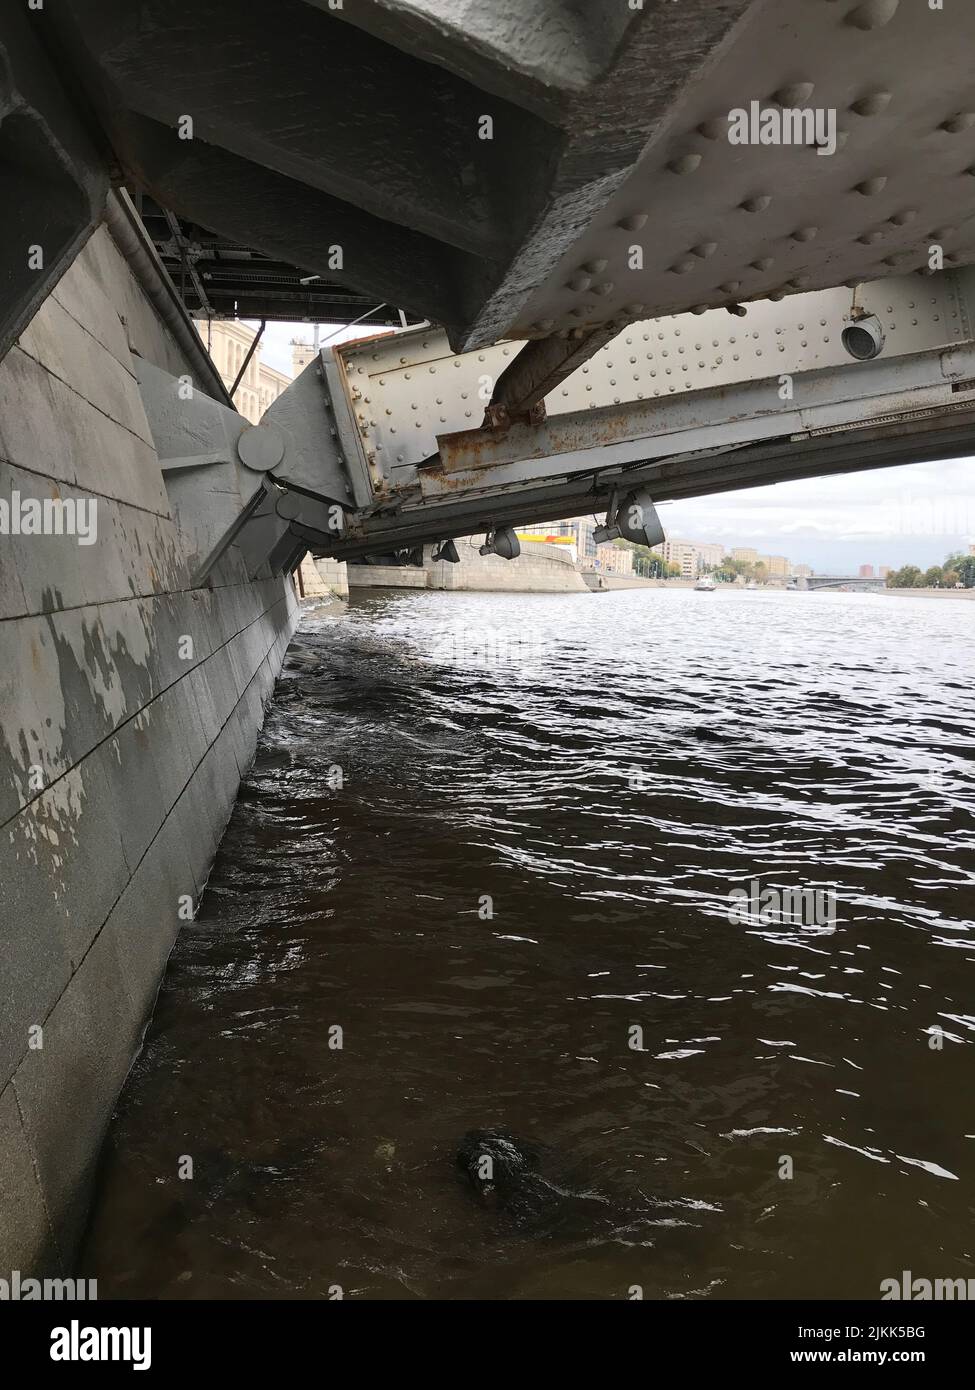 A river under the bridge in a city Stock Photo